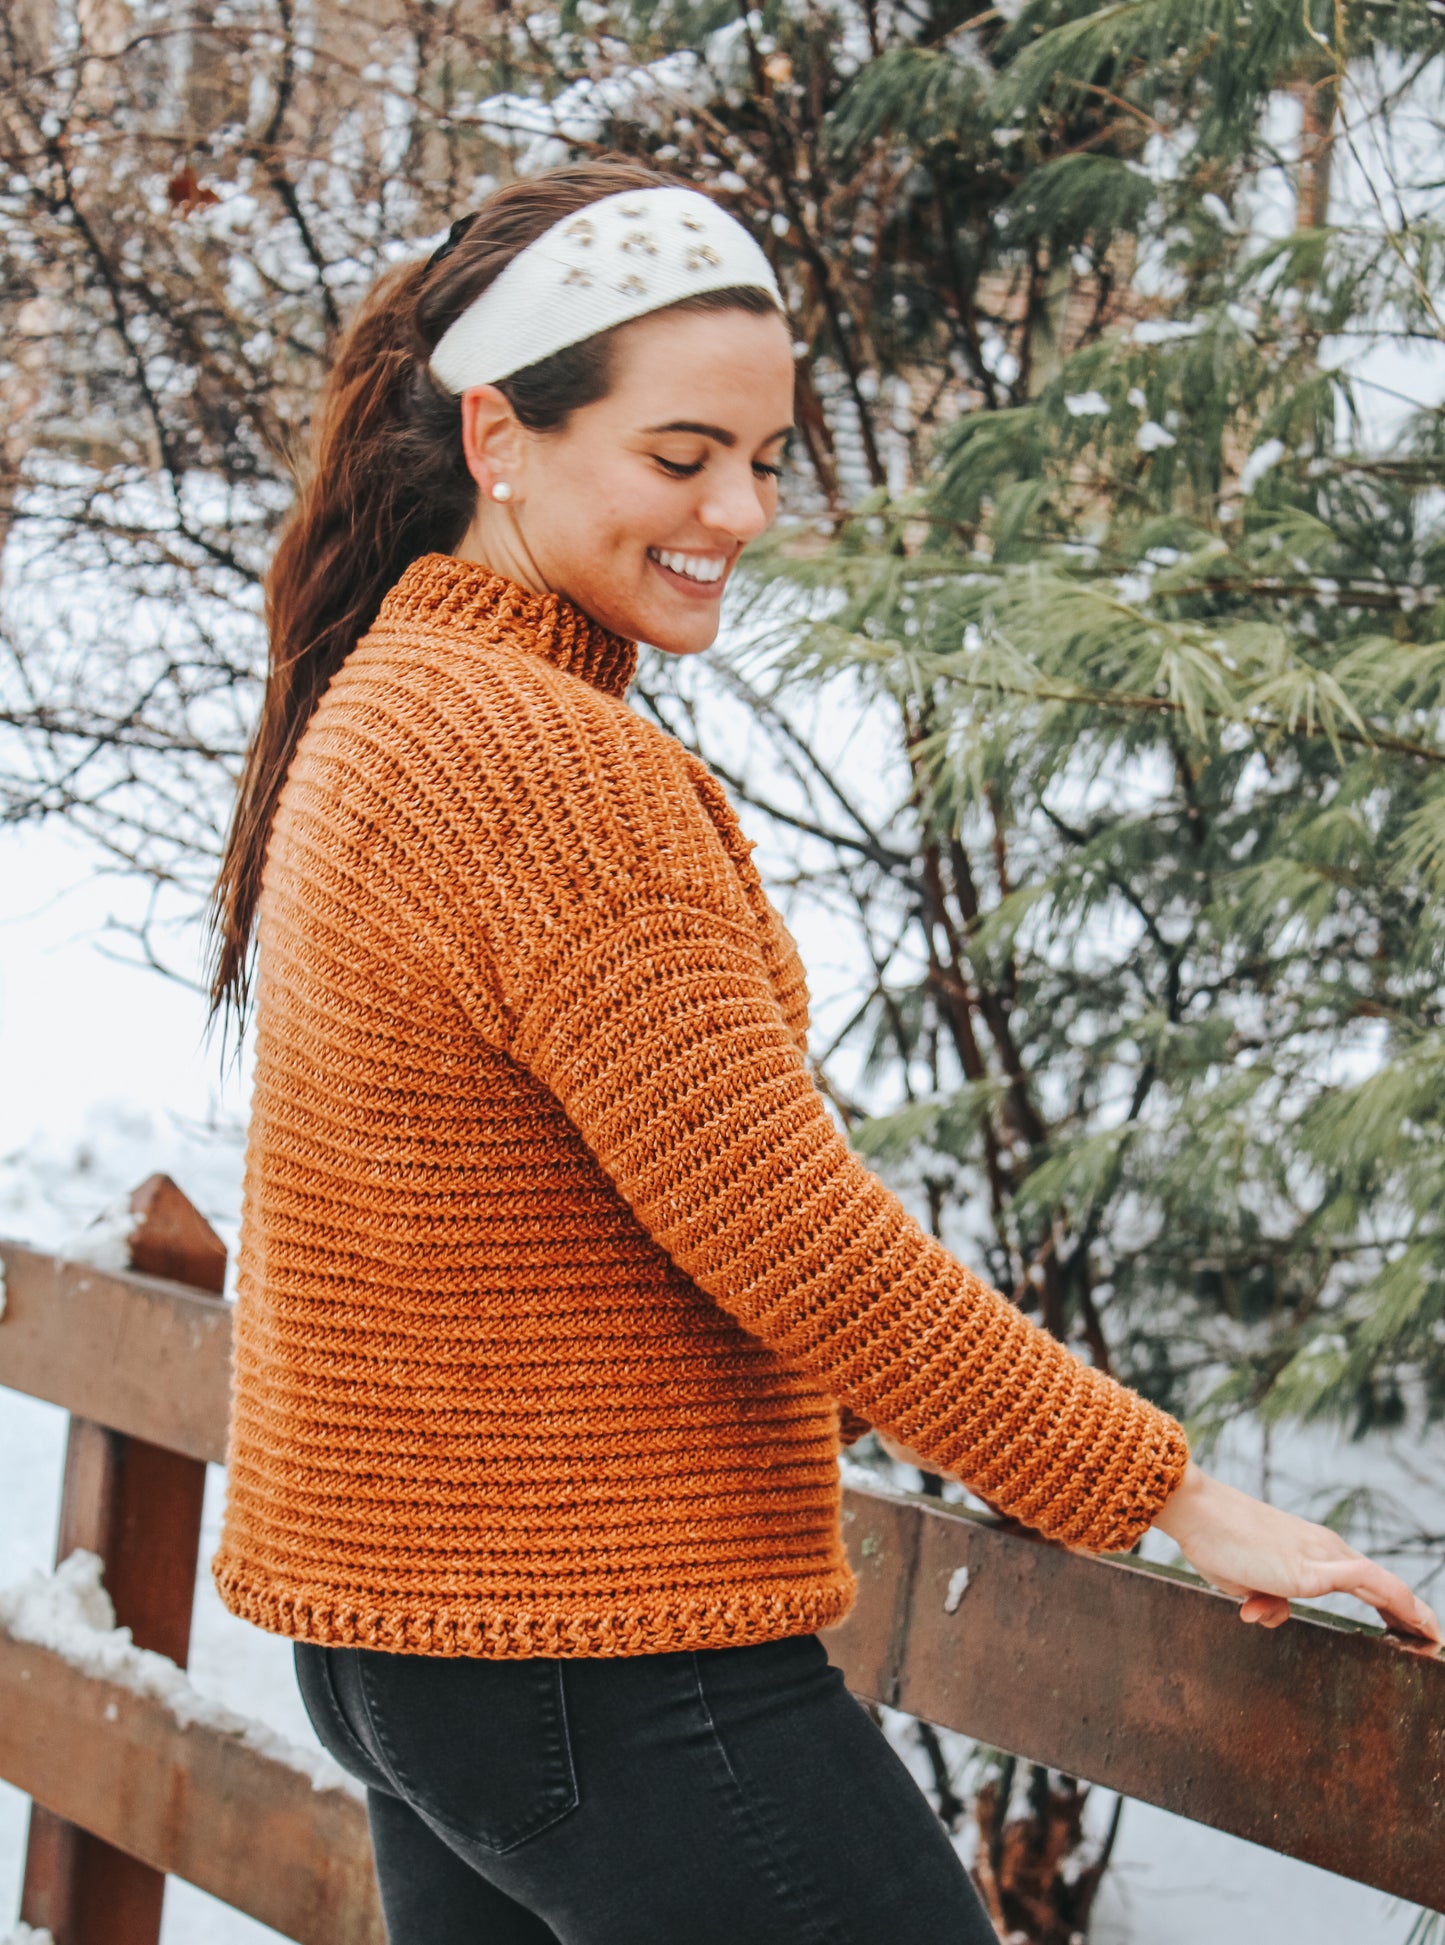 Snow Day Sweater Crochet PDF Pattern by Jessica Brandt Herr